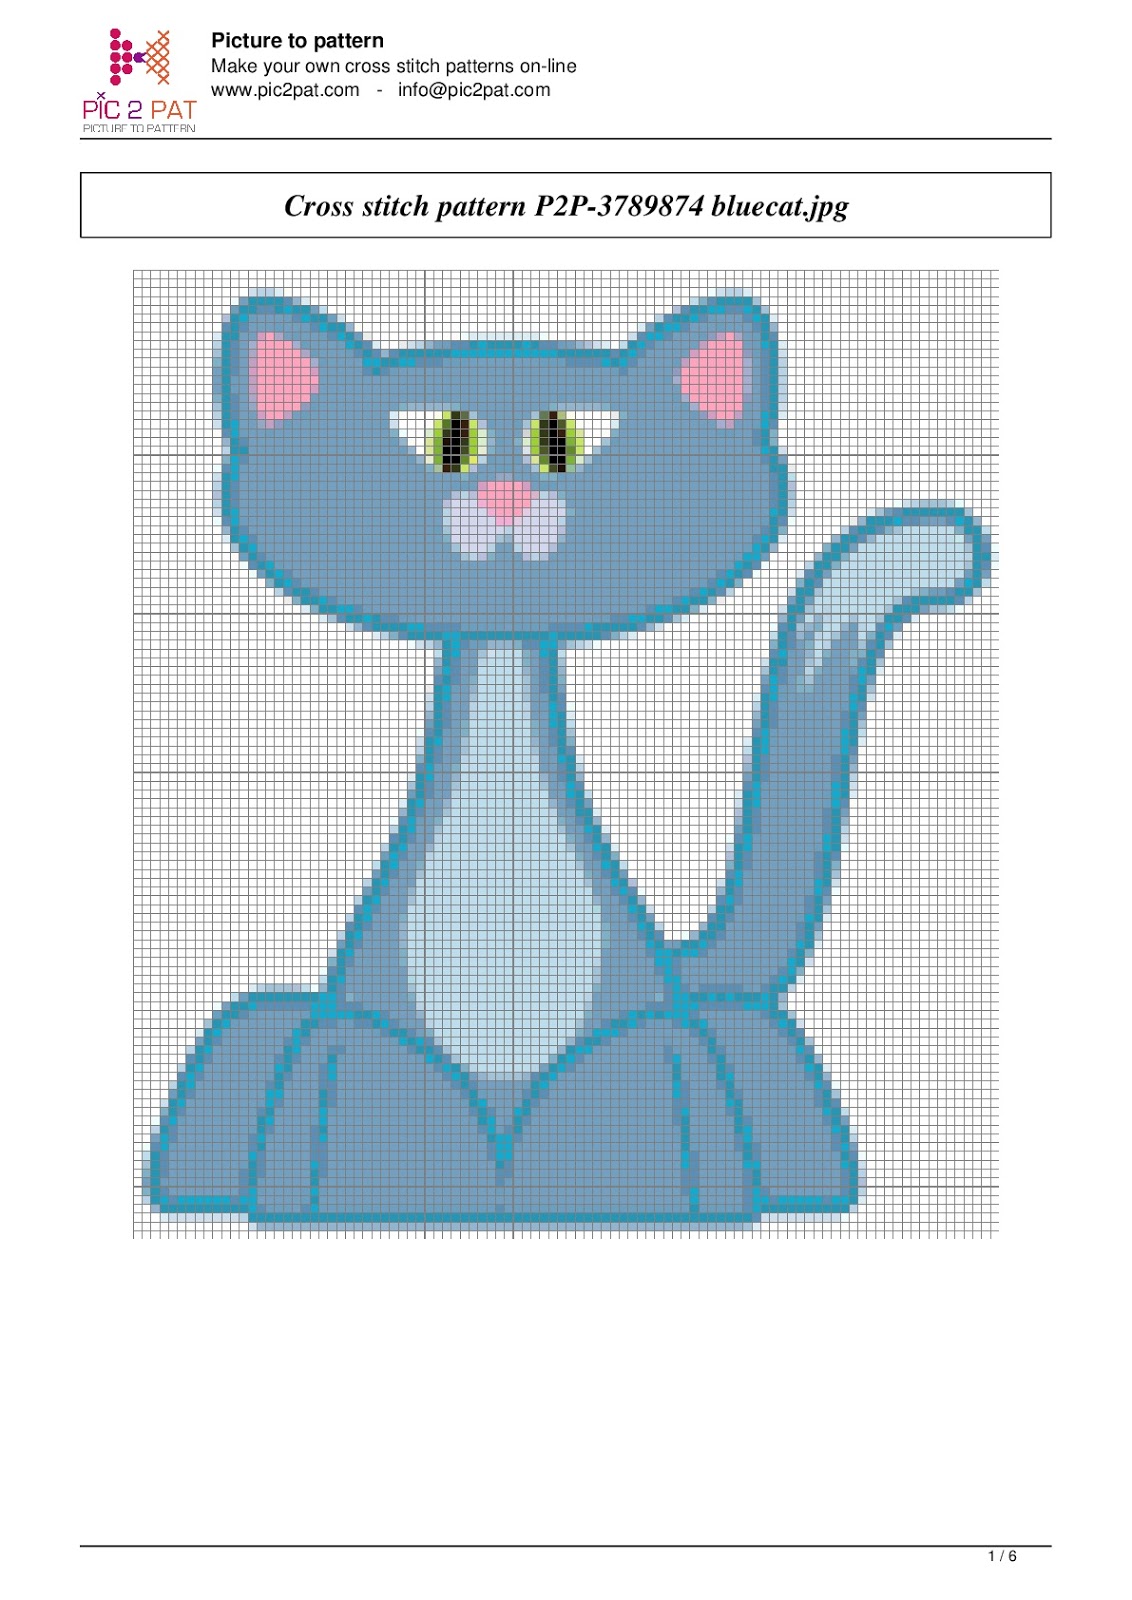 cross-stitch-free-pattern-blue-cat-cross-stitch-beginners